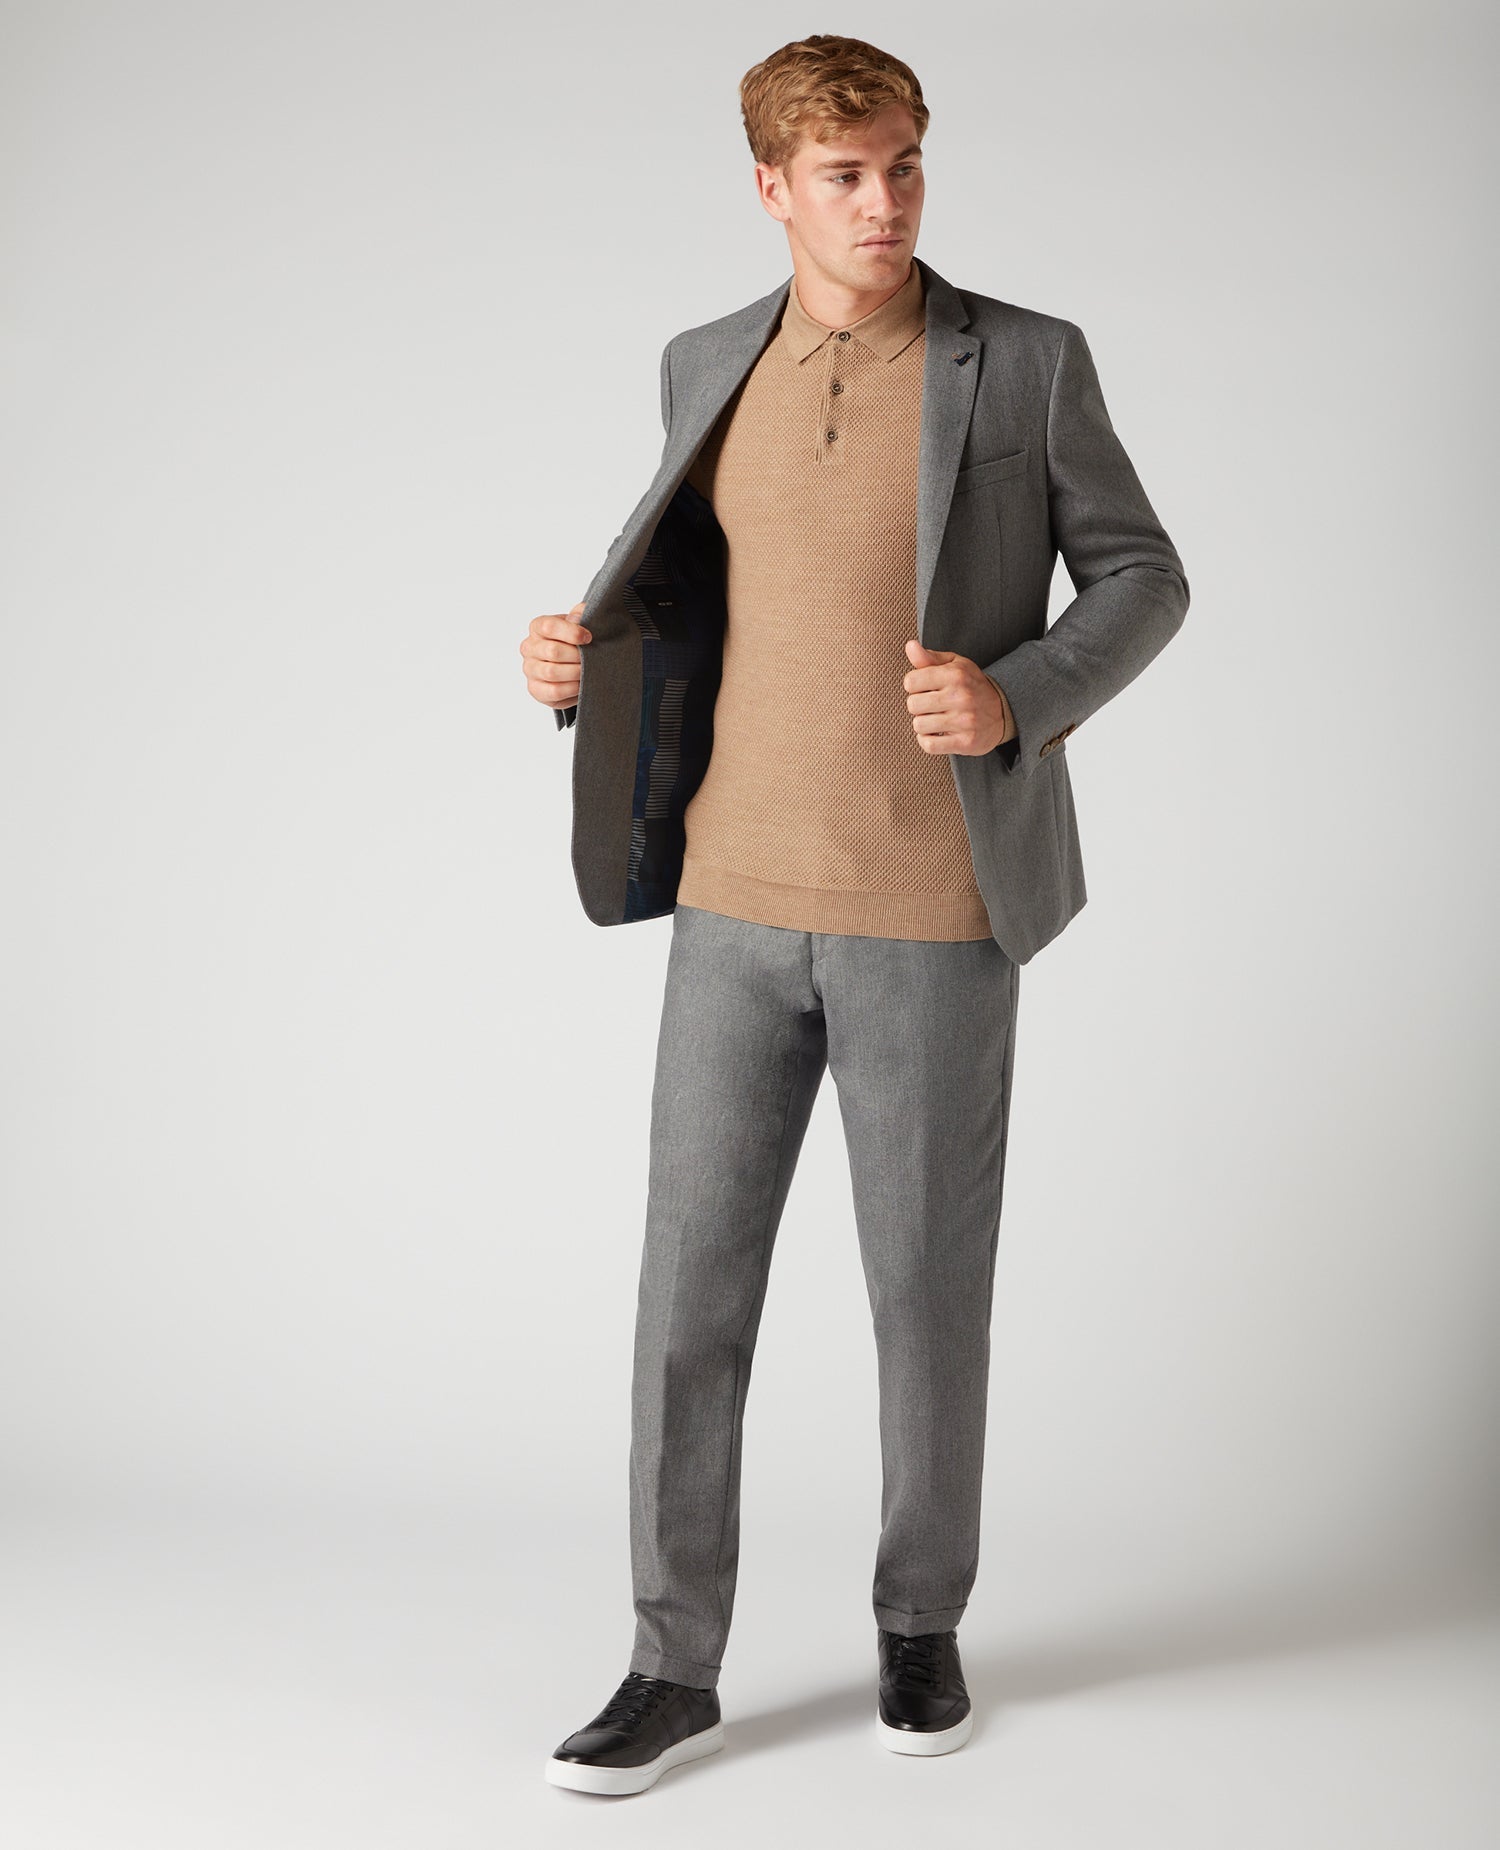 Remus Uomo Long Sleeve Knitted Polo - Matt O'Brien Fashions